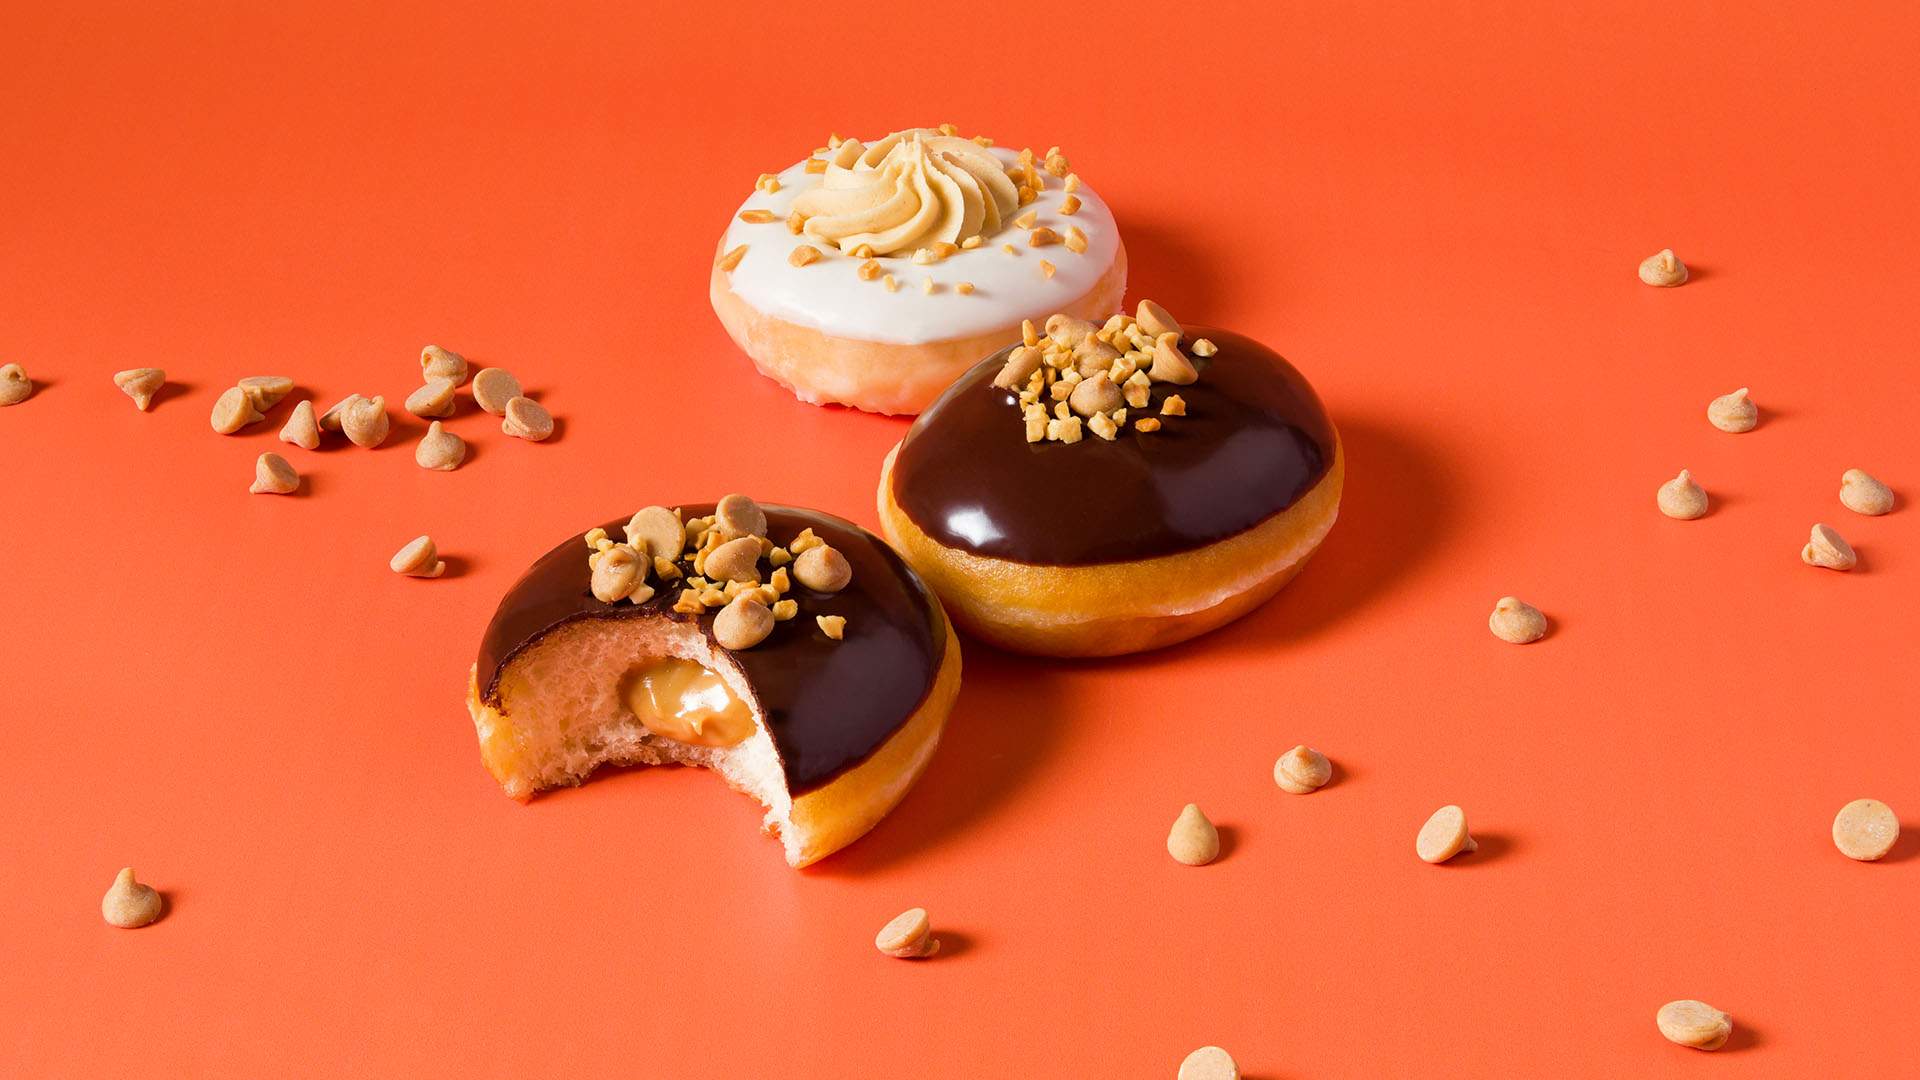 Krispy Kreme and Reese's Have Teamed Up on a Tastebud-Tempting New Range of Peanut Butter Doughnuts